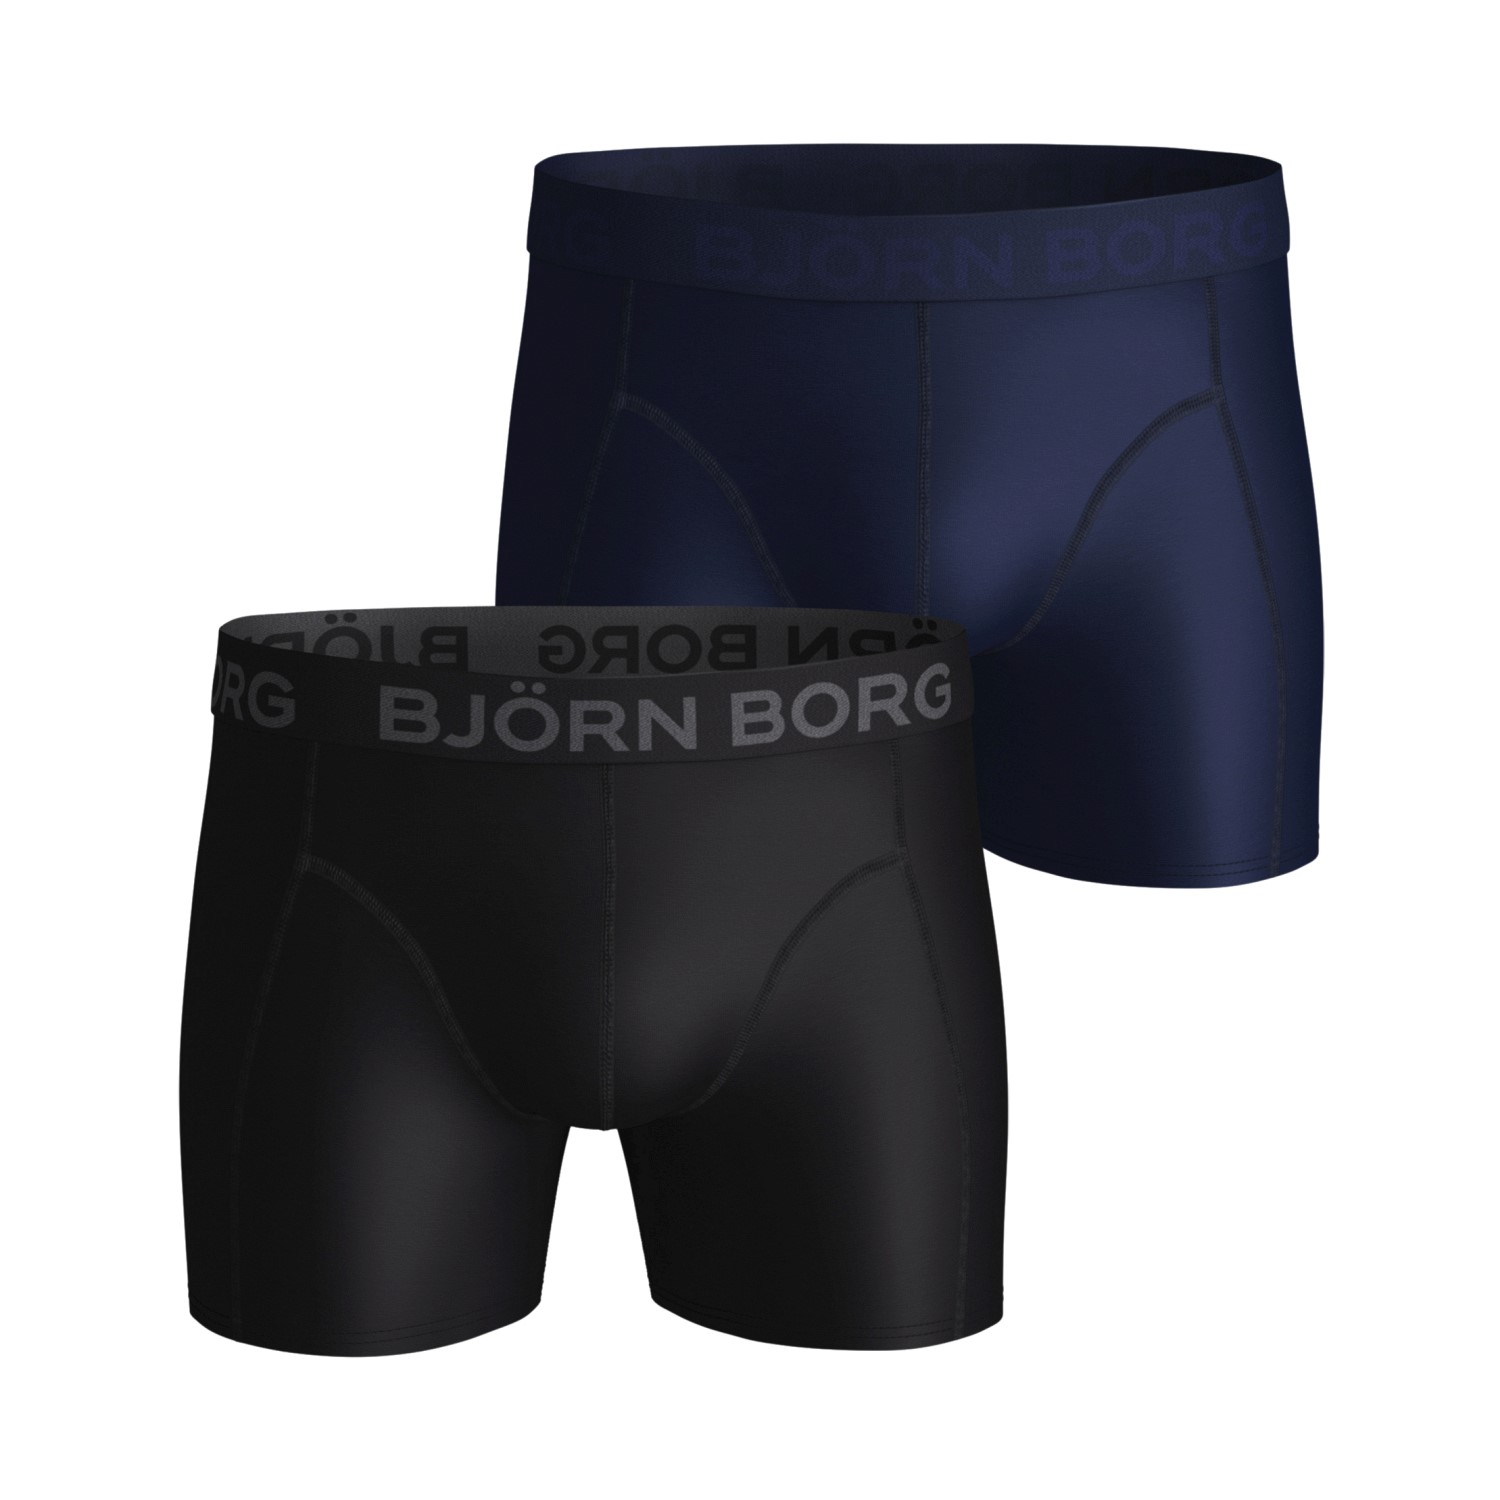 Björn Borg Lightweight Microfiber Shorts